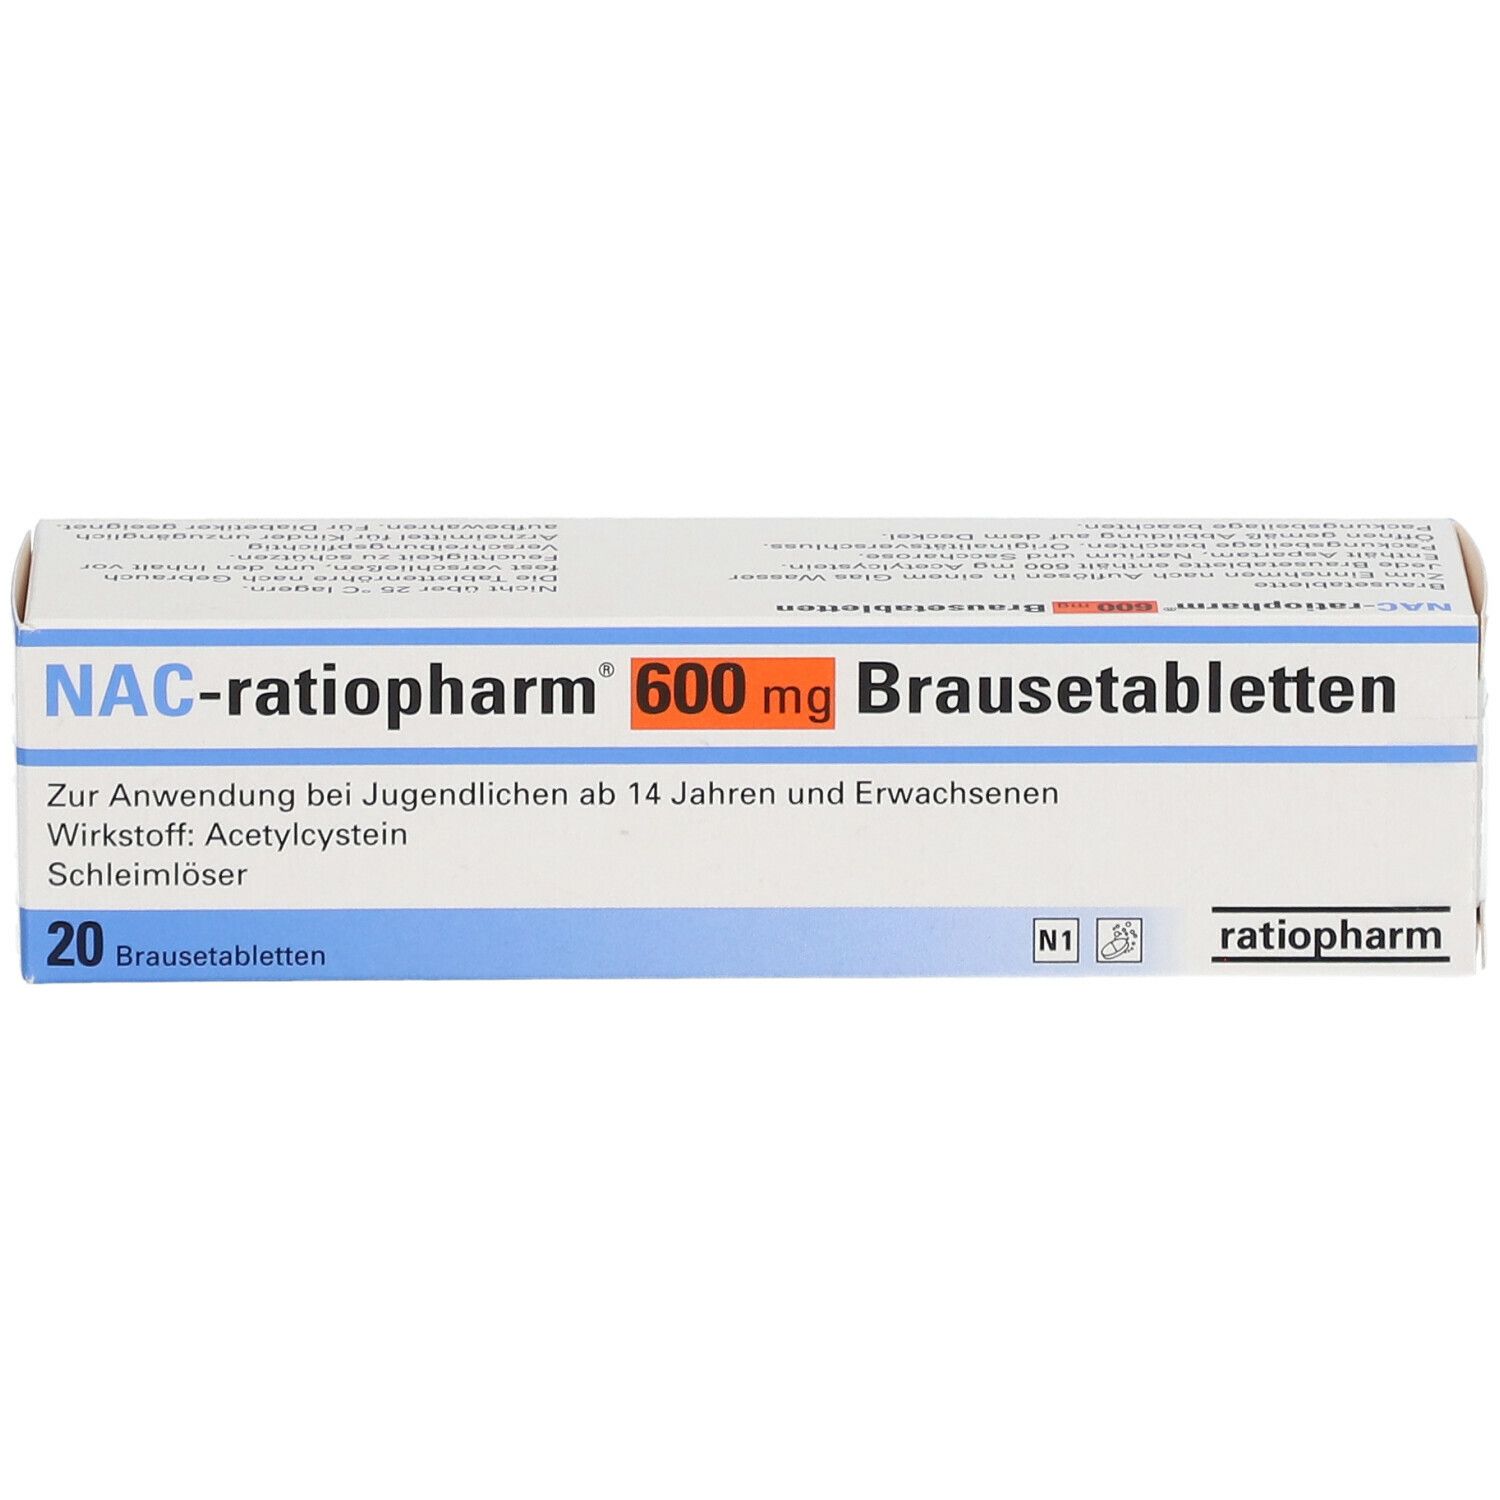 NAC-ratiopharm® 600 mg